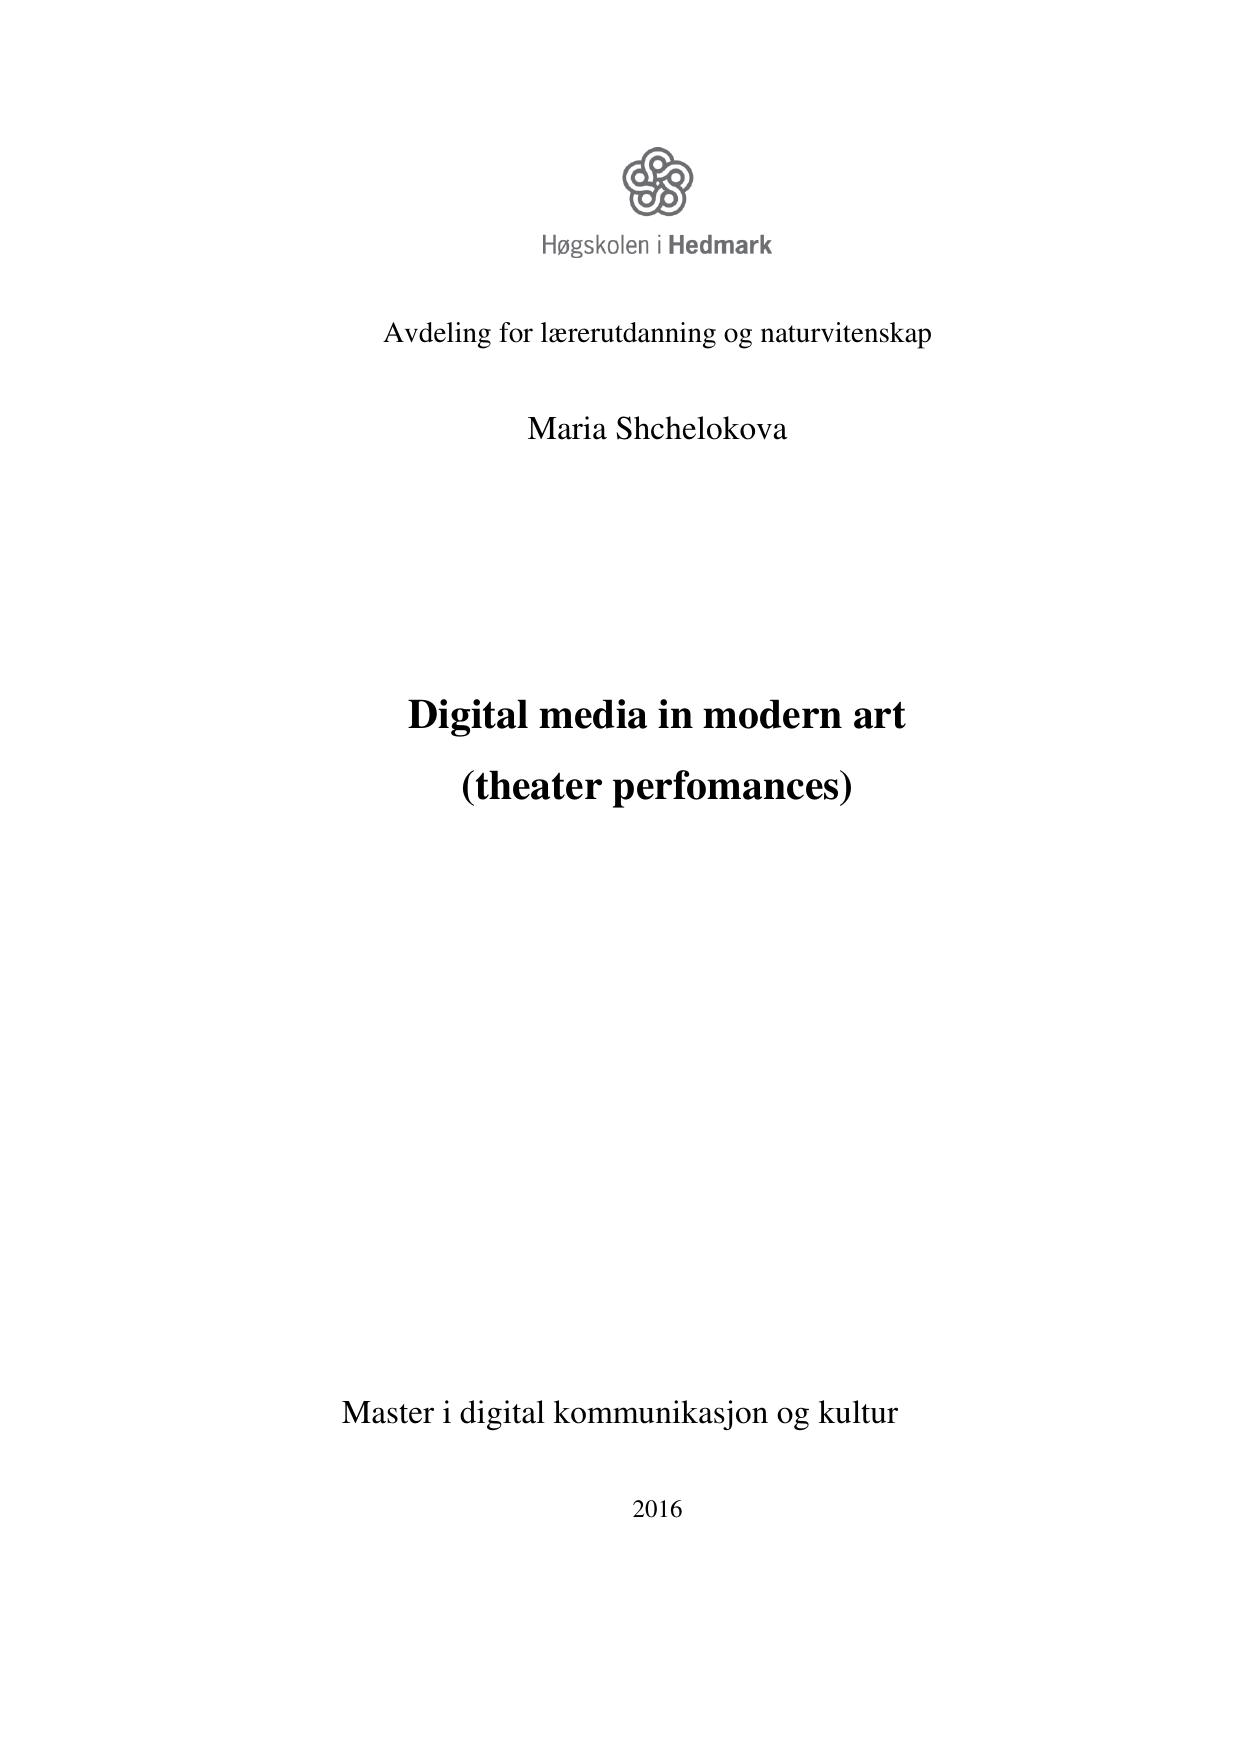 Digital media in modern art (theater perfomances) 2016